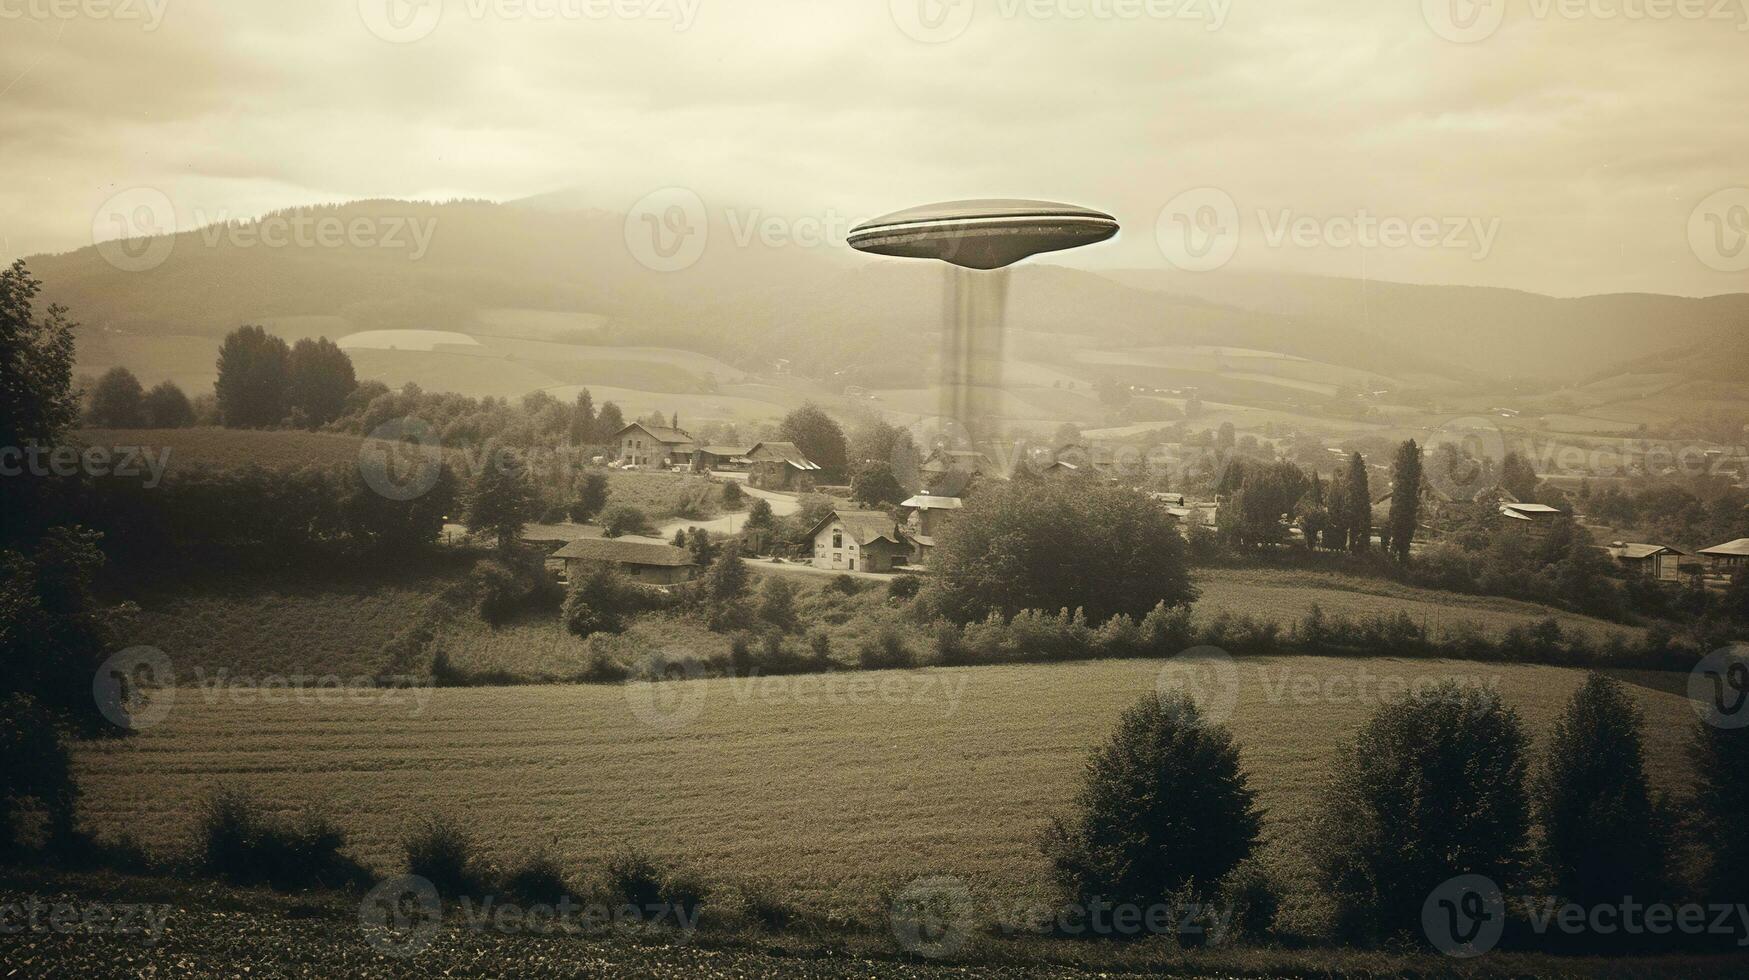 generativo ai, UFO sobre a italiano panorama vintage foto, alienígenas testemunhas retro Década de 1930 estilo fotografia foto